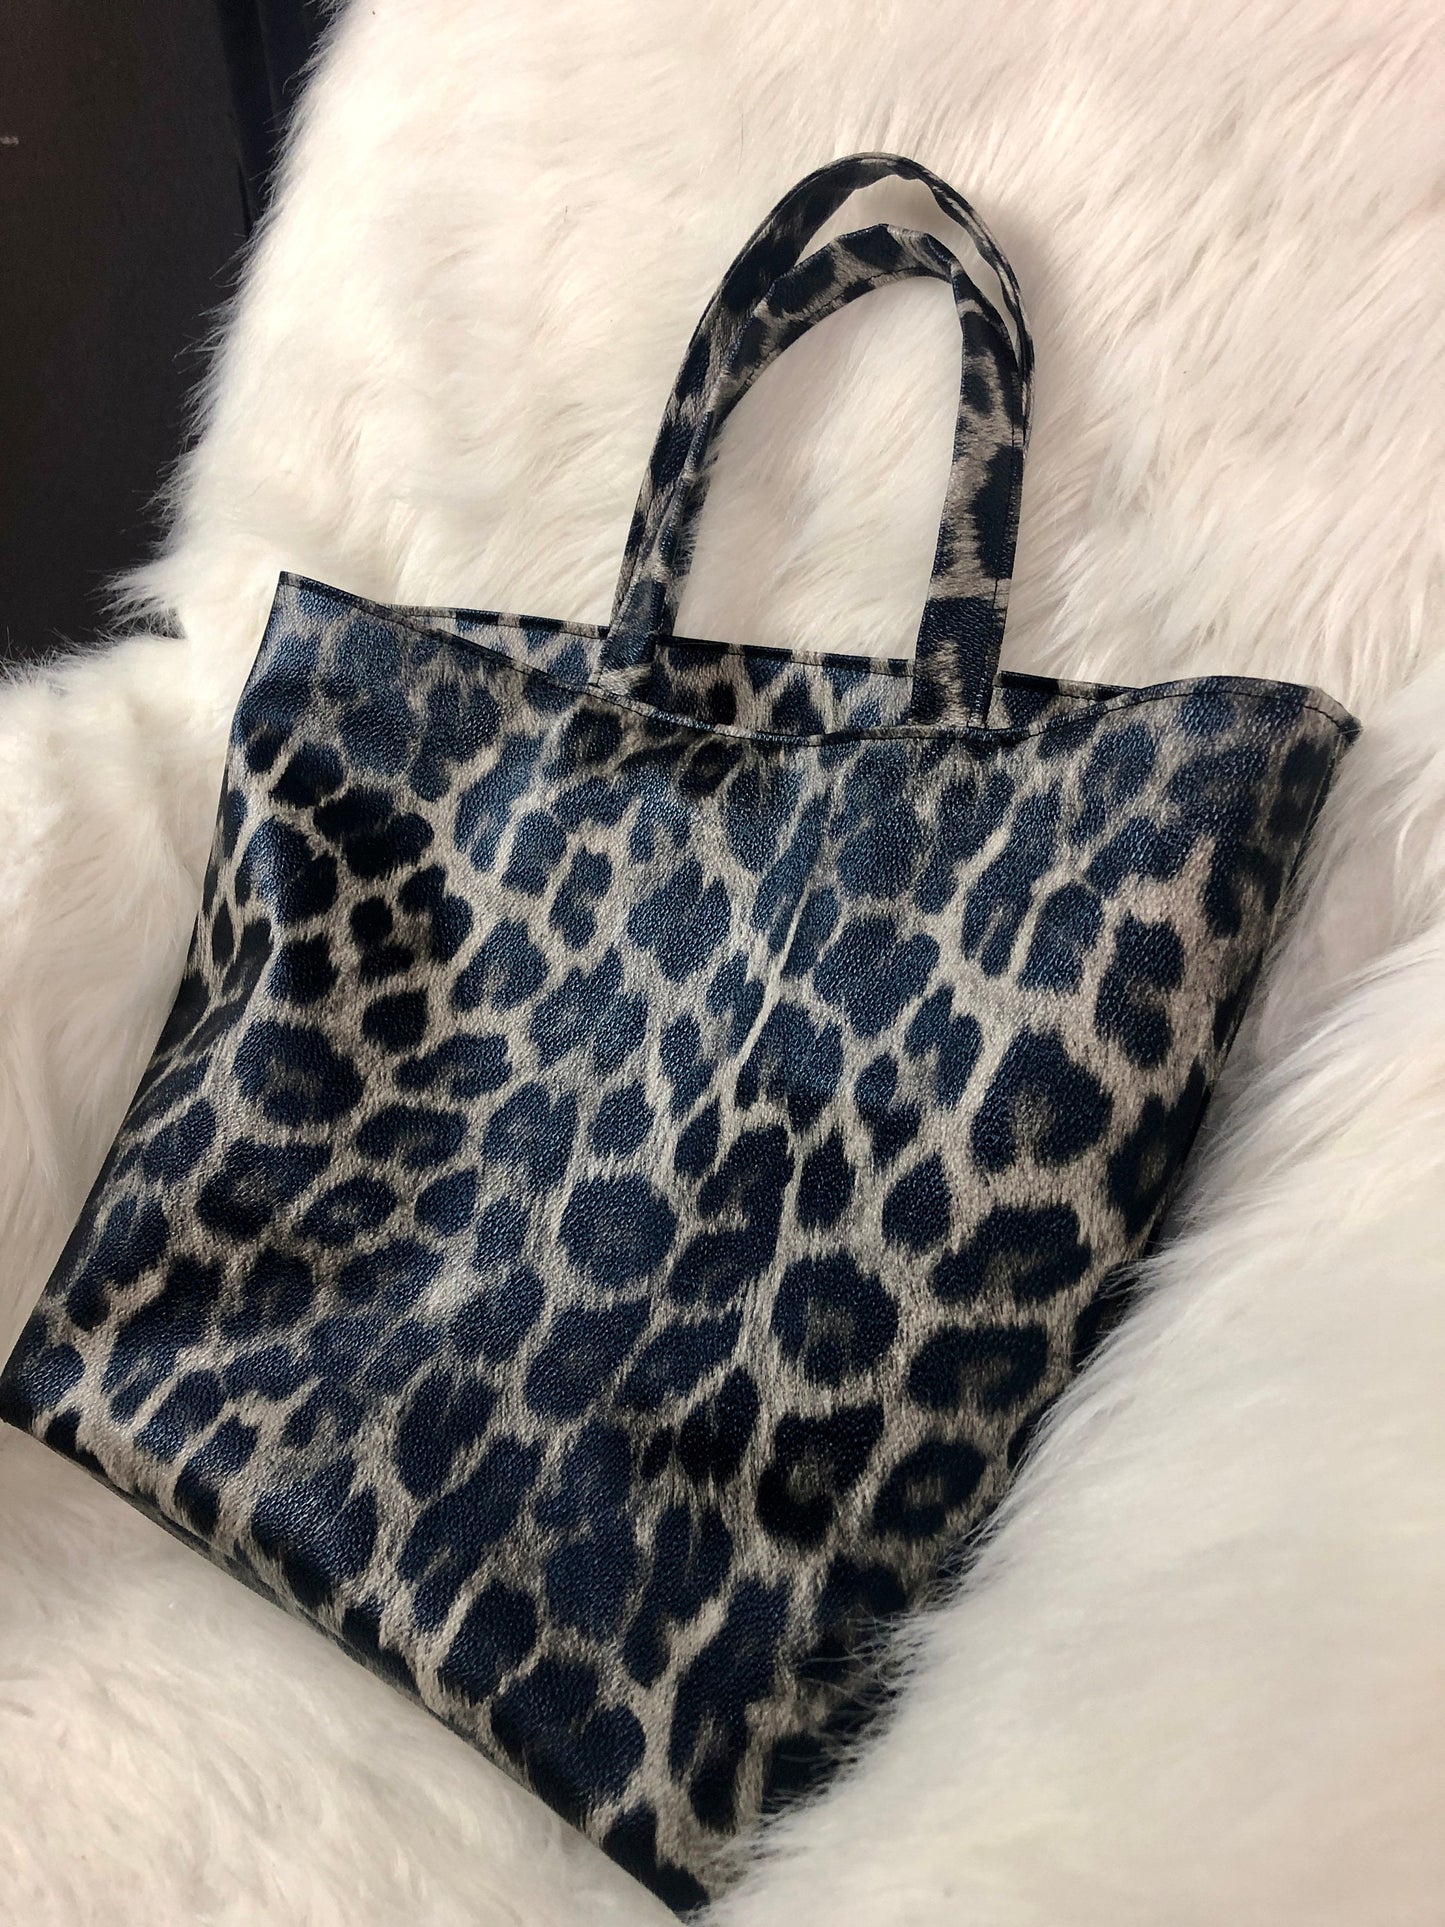 Faux leather leopard print tote bag